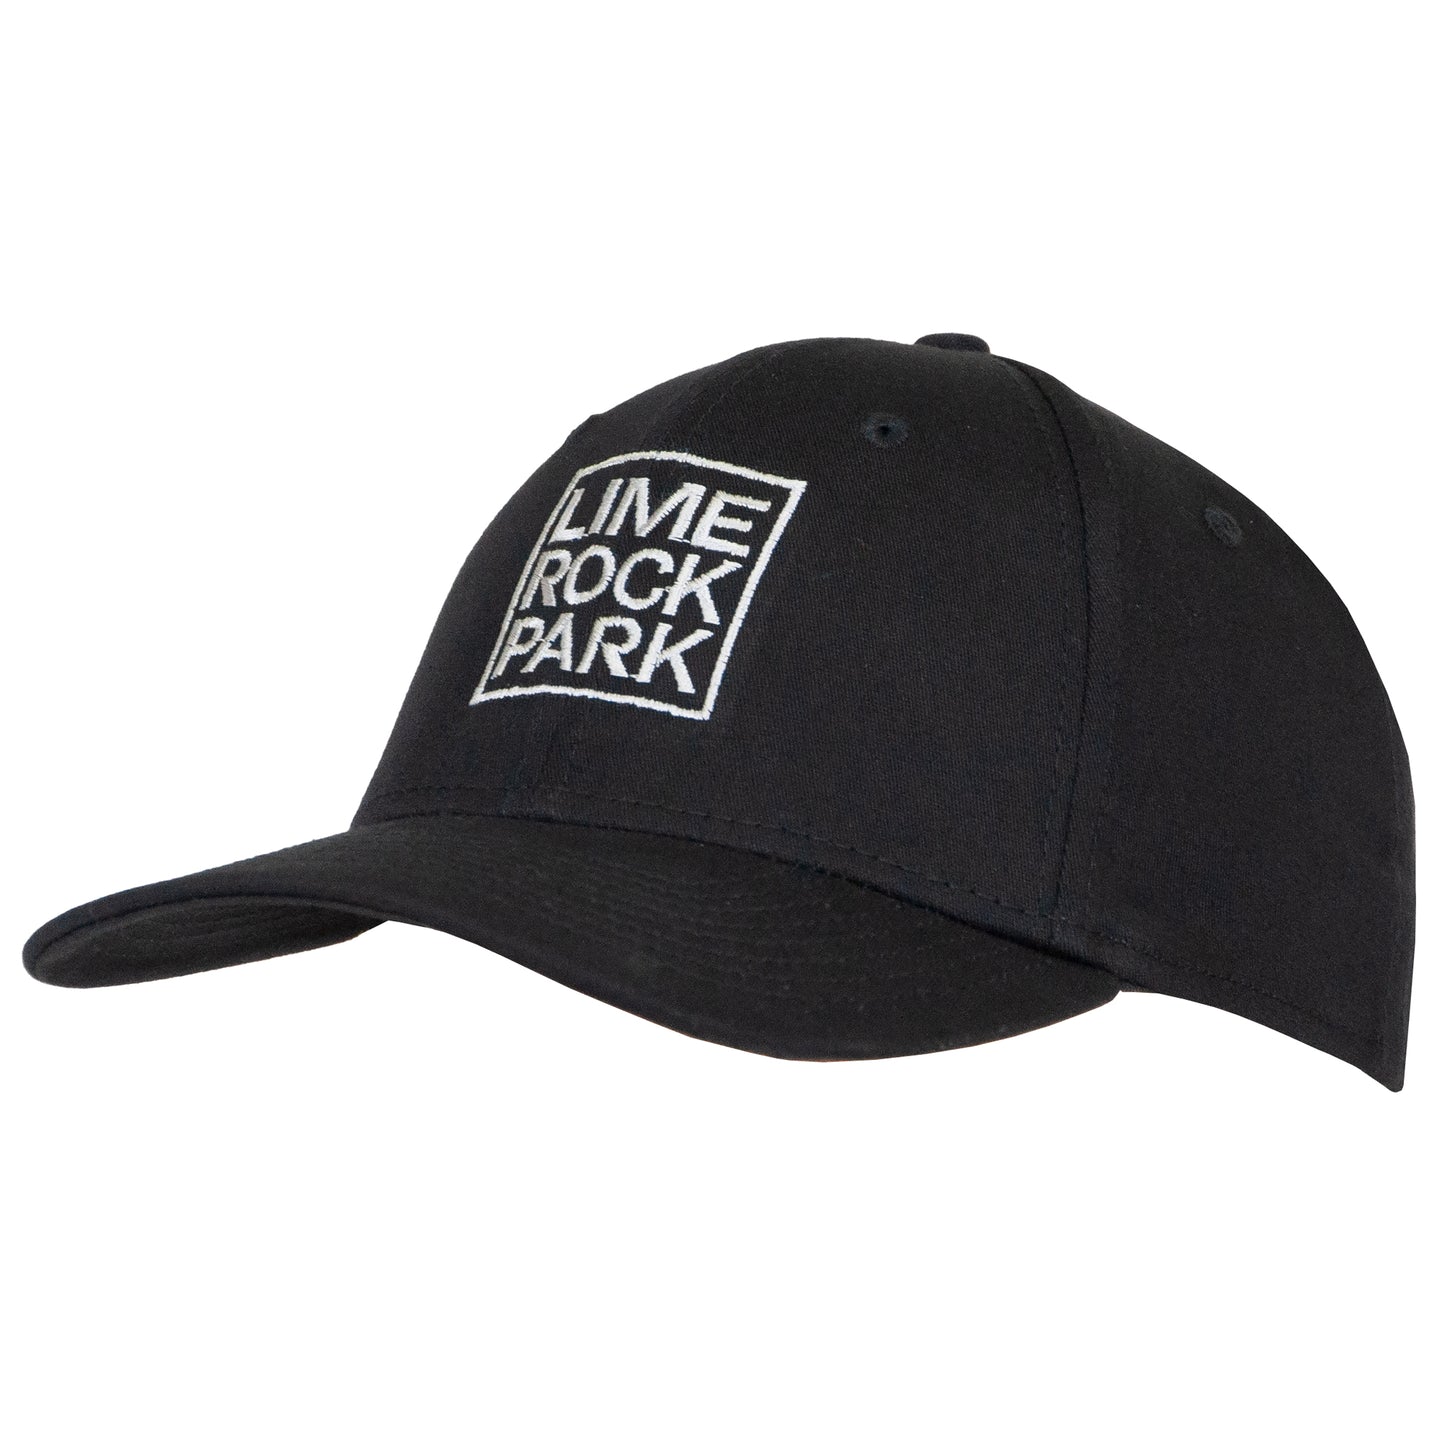 LRP New Era Sized Hat - Black